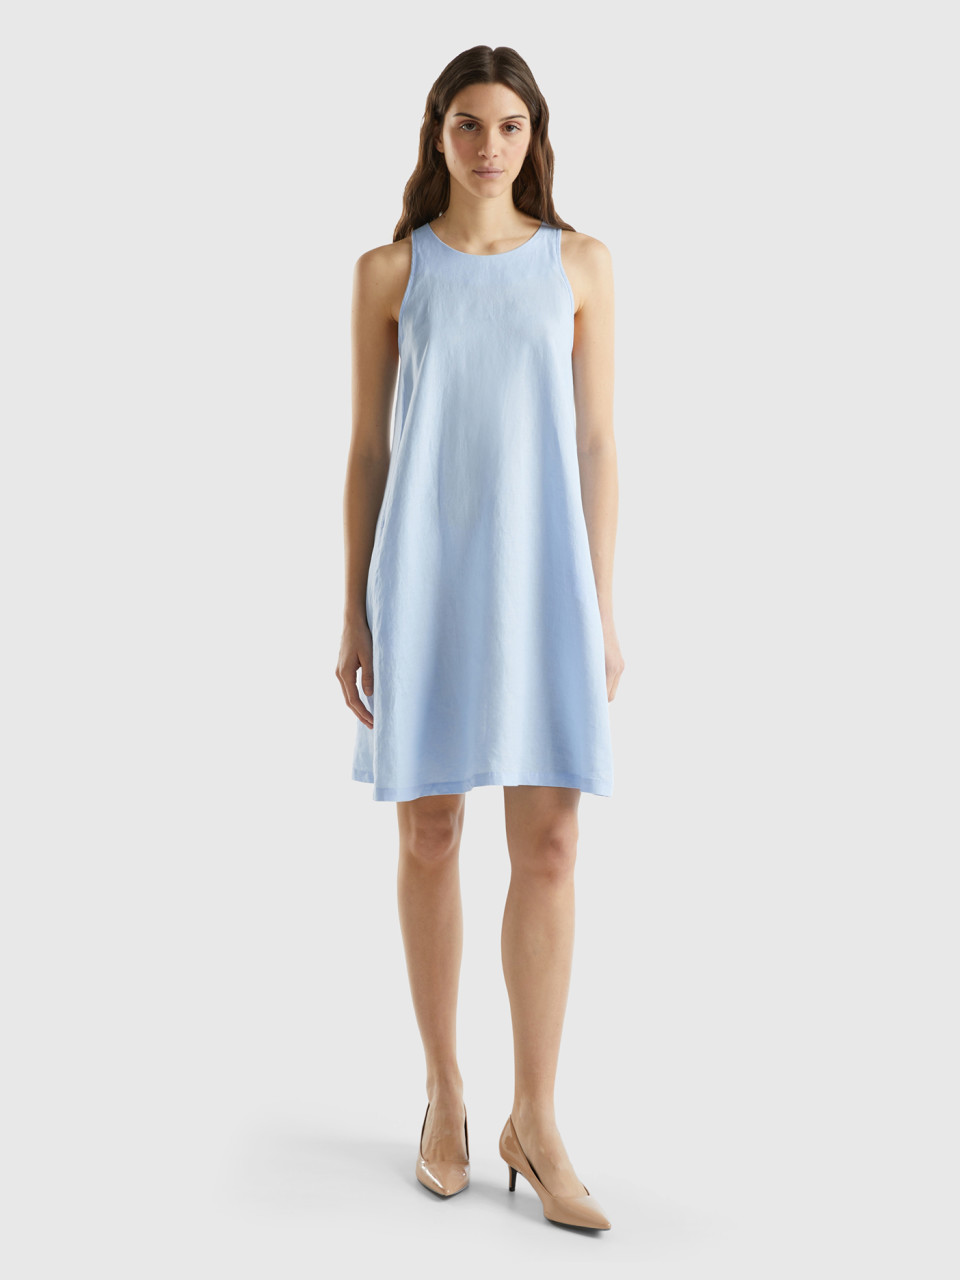 Benetton, Sleeveless Dress In Pure Linen, Sky Blue, Women